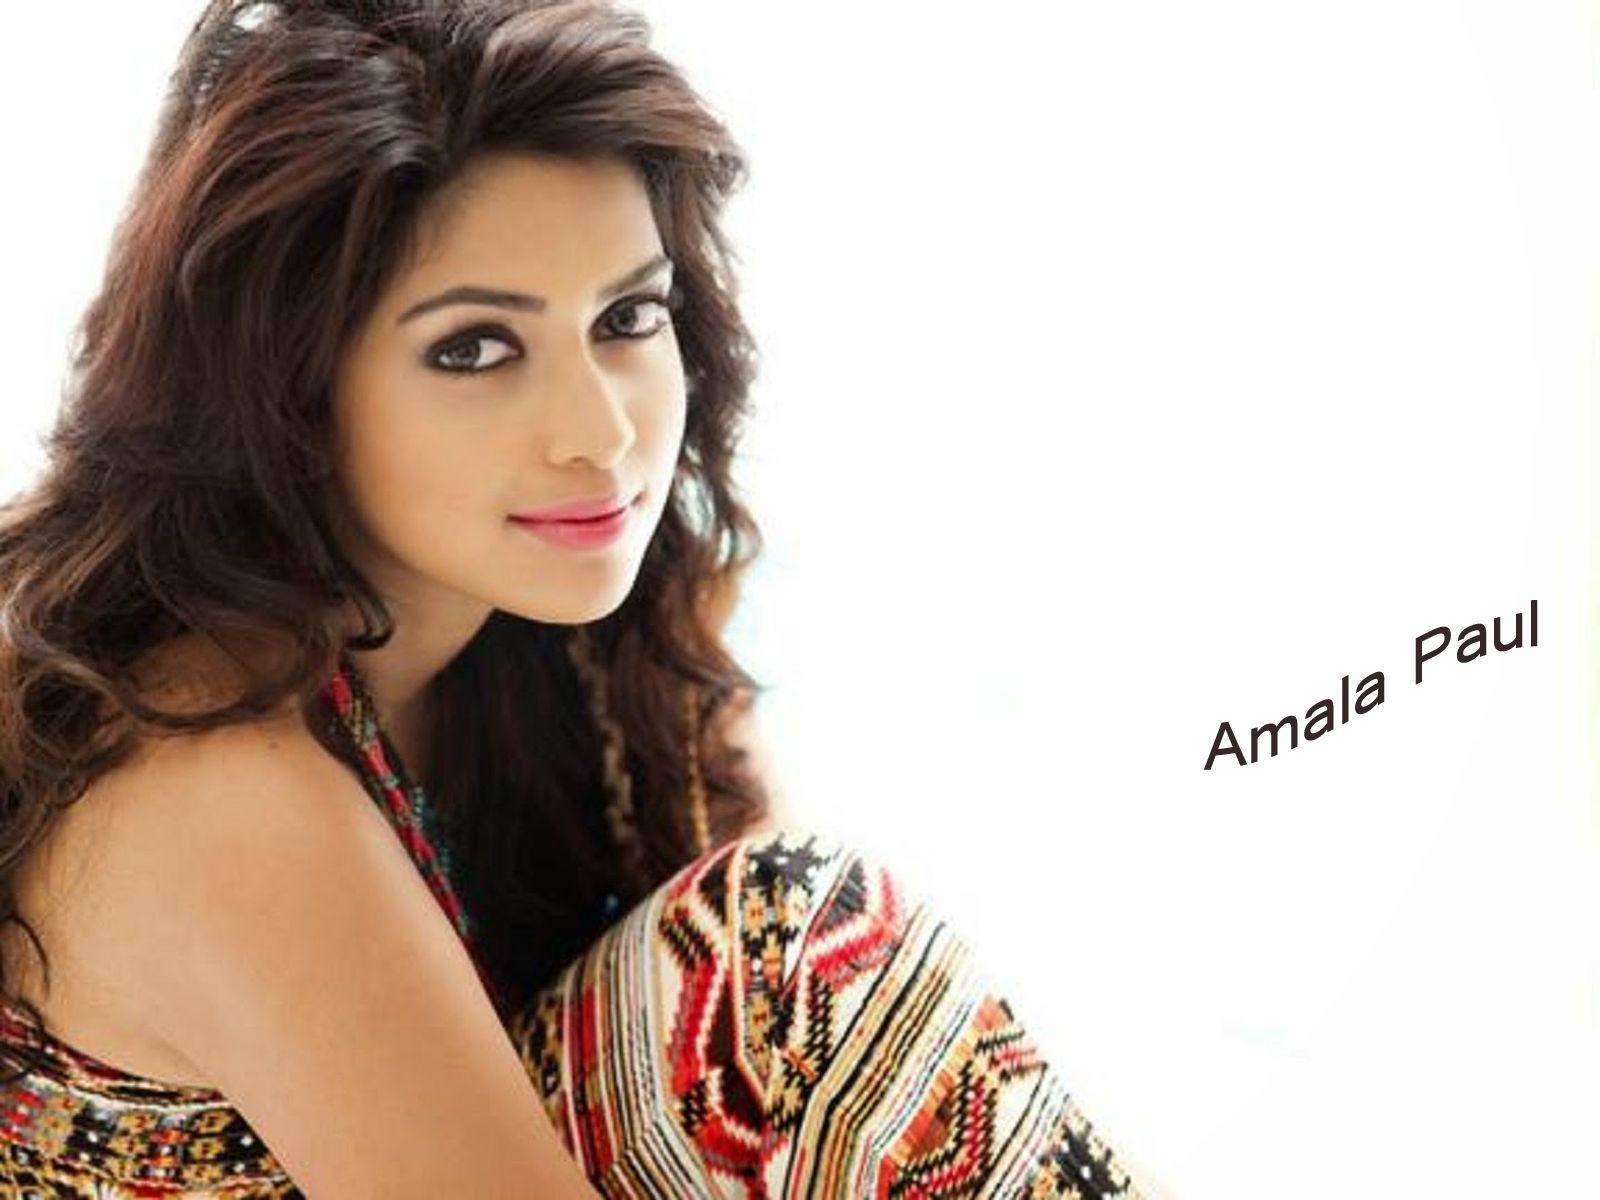 Tamil Actress HD Wallpapers 1080p - Wallpaper Cave